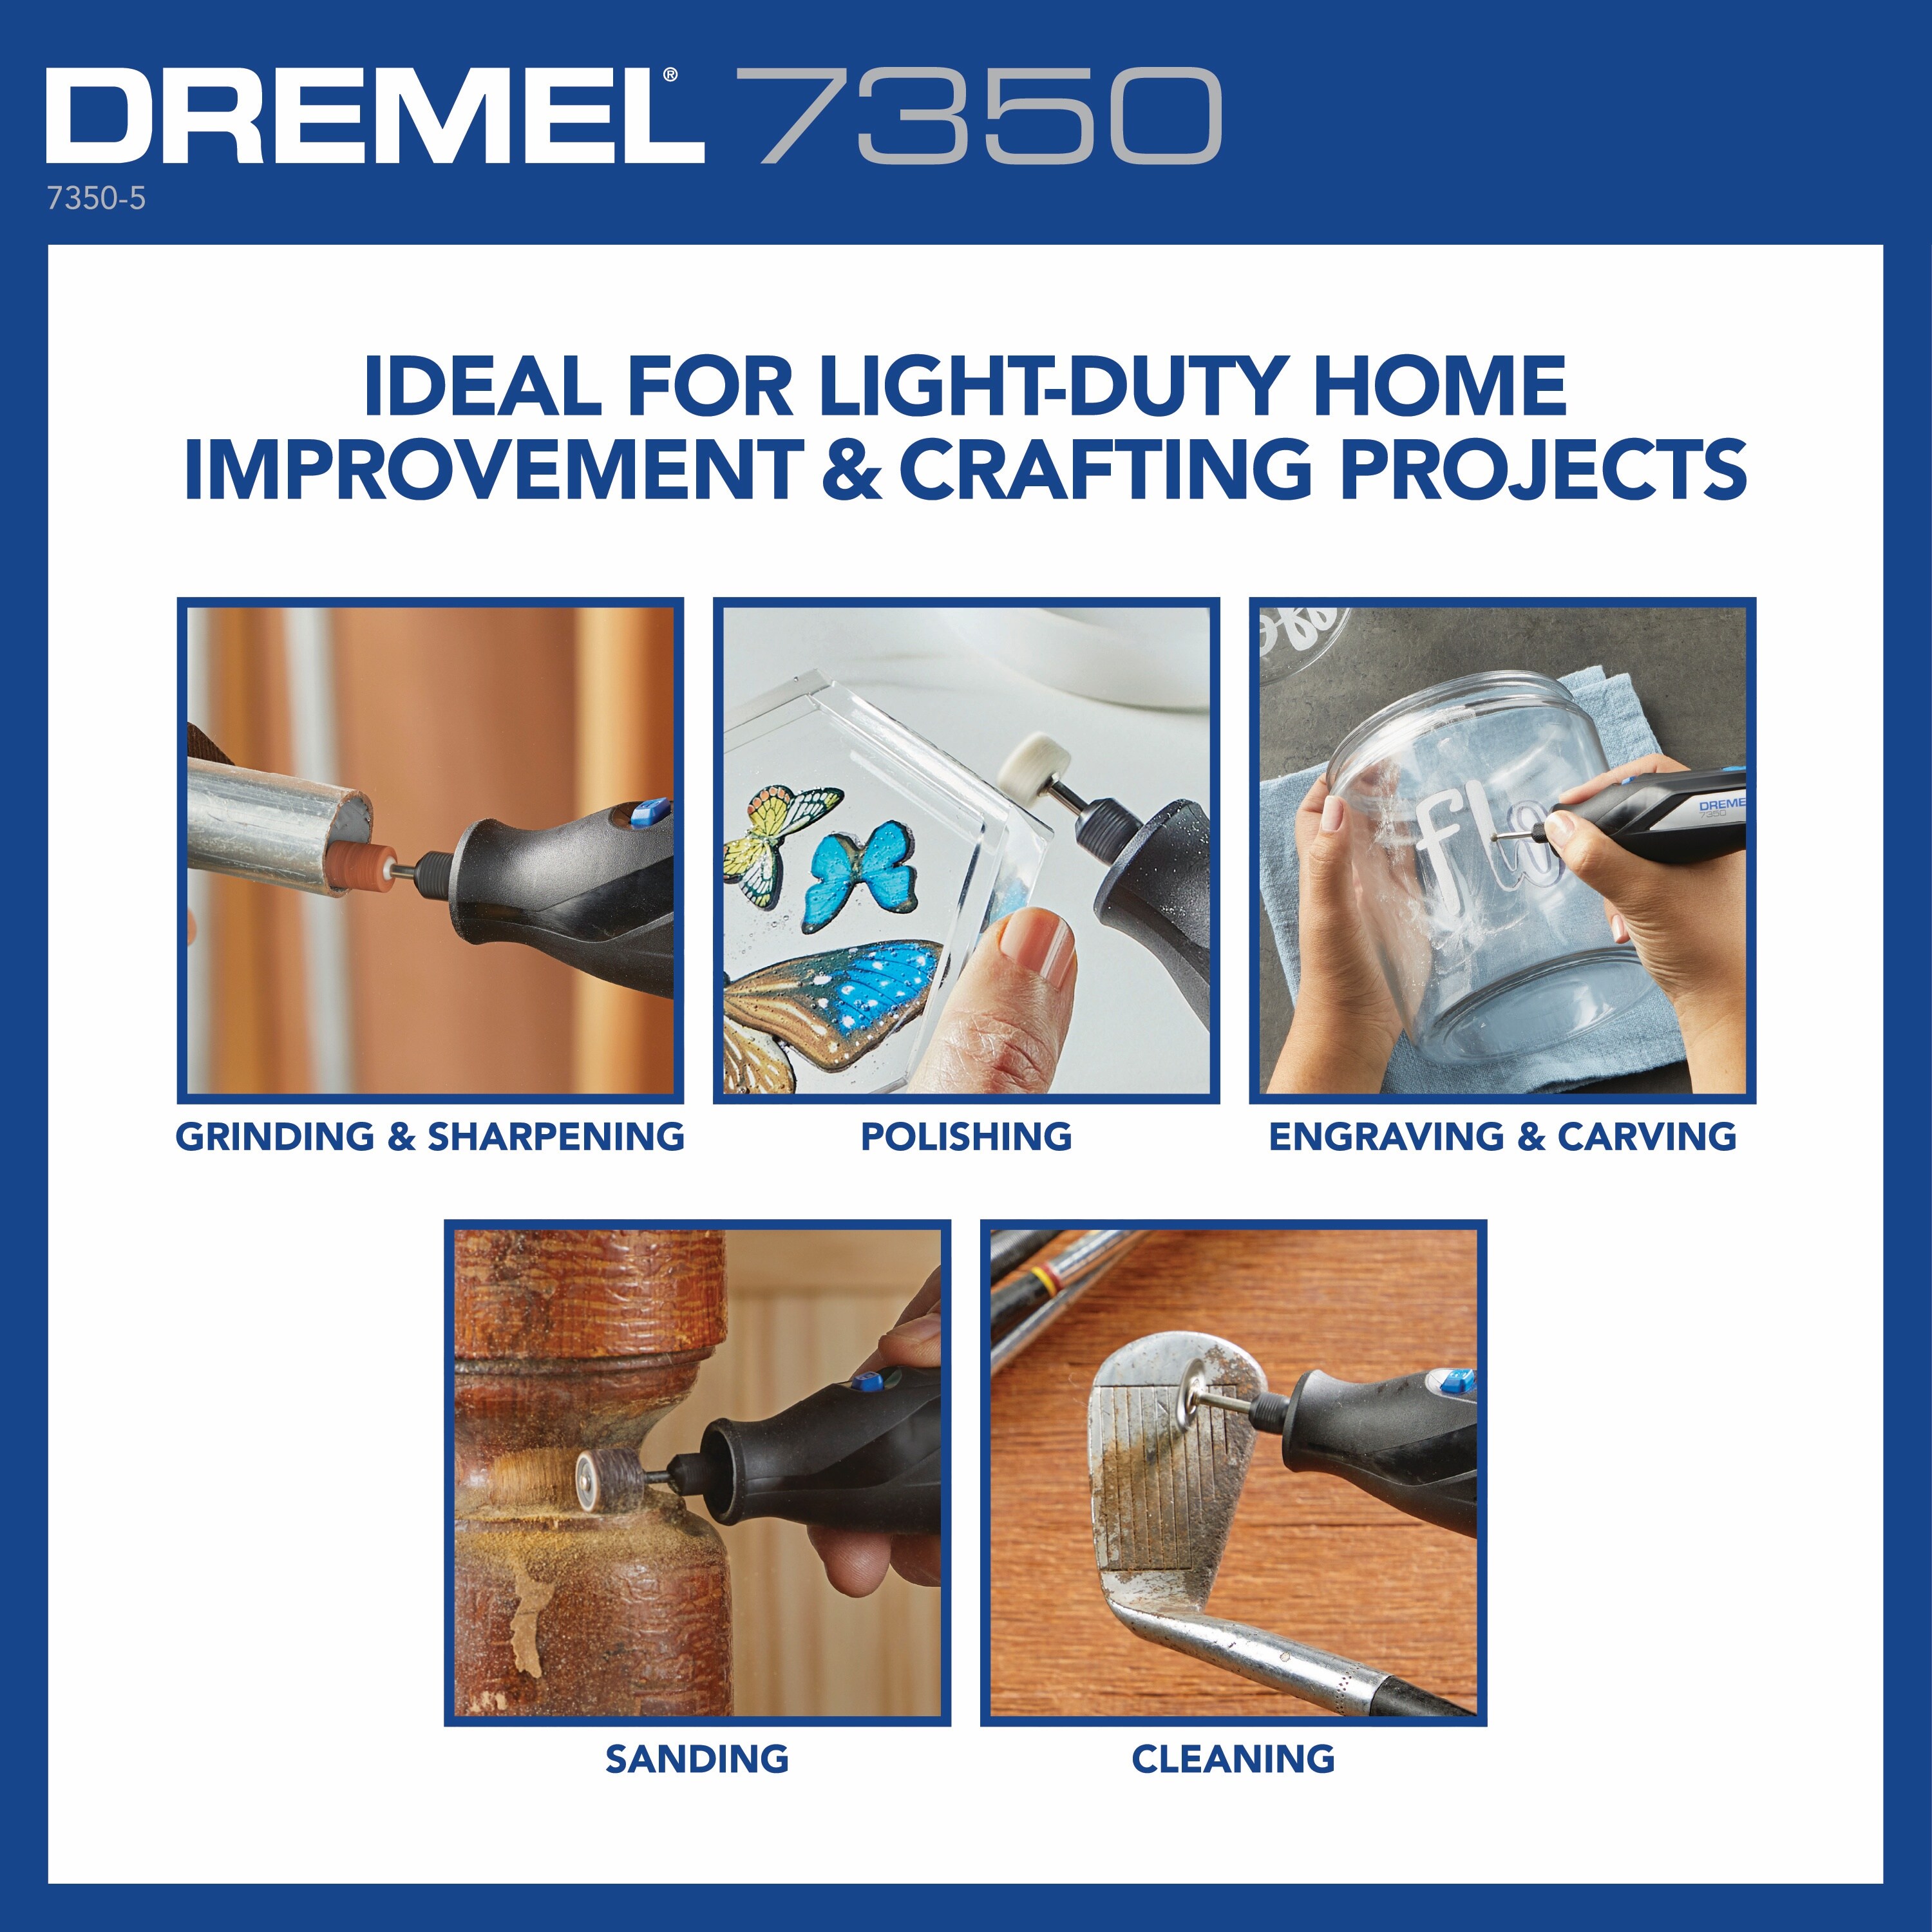 Dremel 7350 4 Volt 12000 RPM Cordless Rotary Tool Kit - Black for